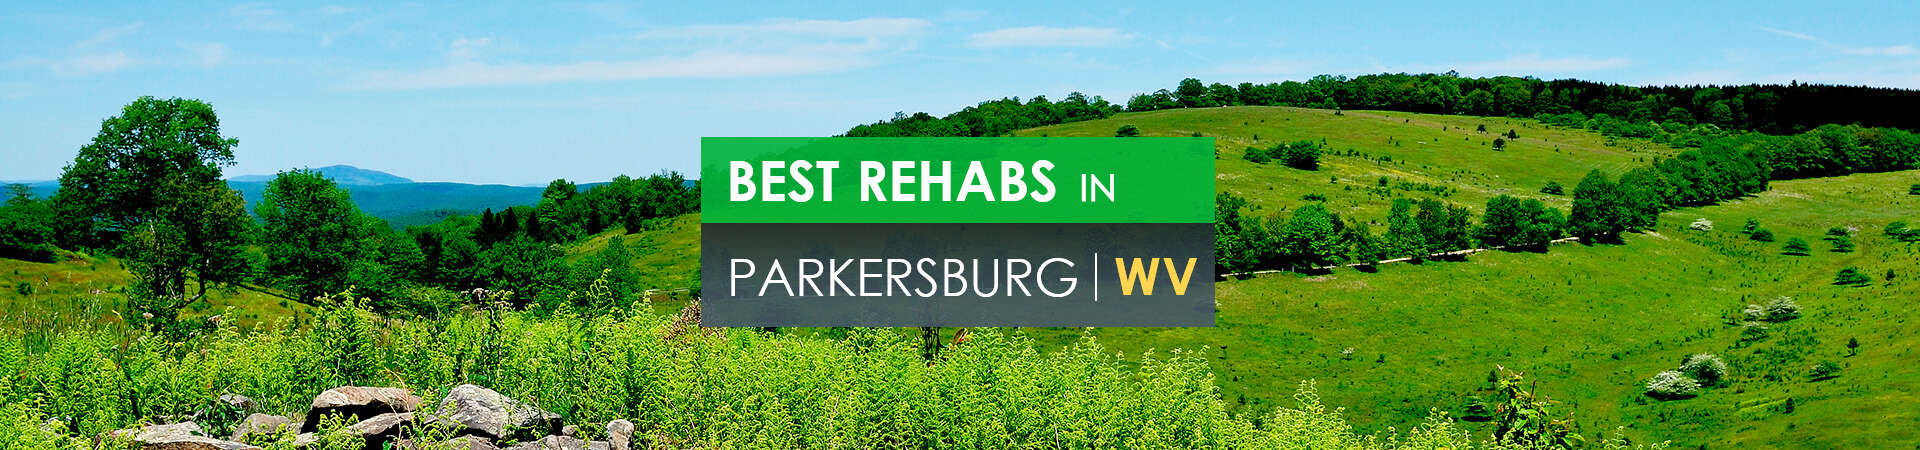 Best rehabs in Parkersburg, WV